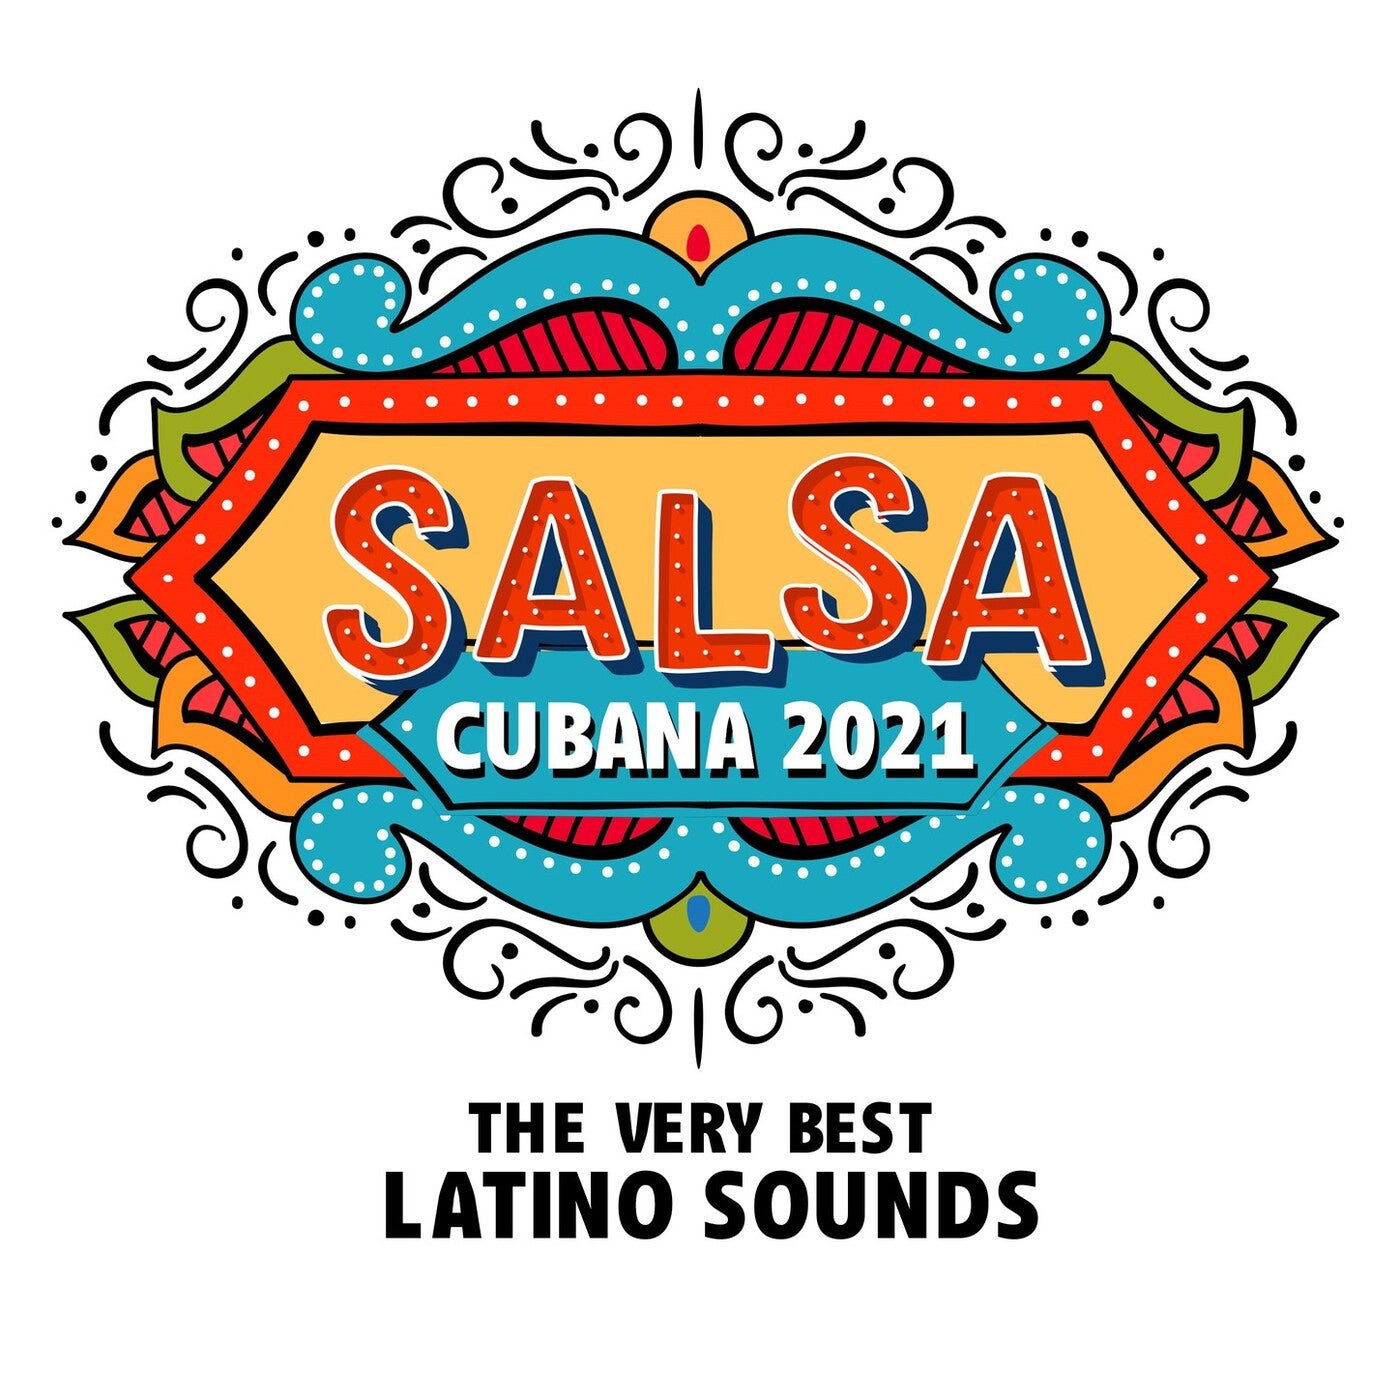 Salsa Cubana 2021: The Very Best Latino Sounds